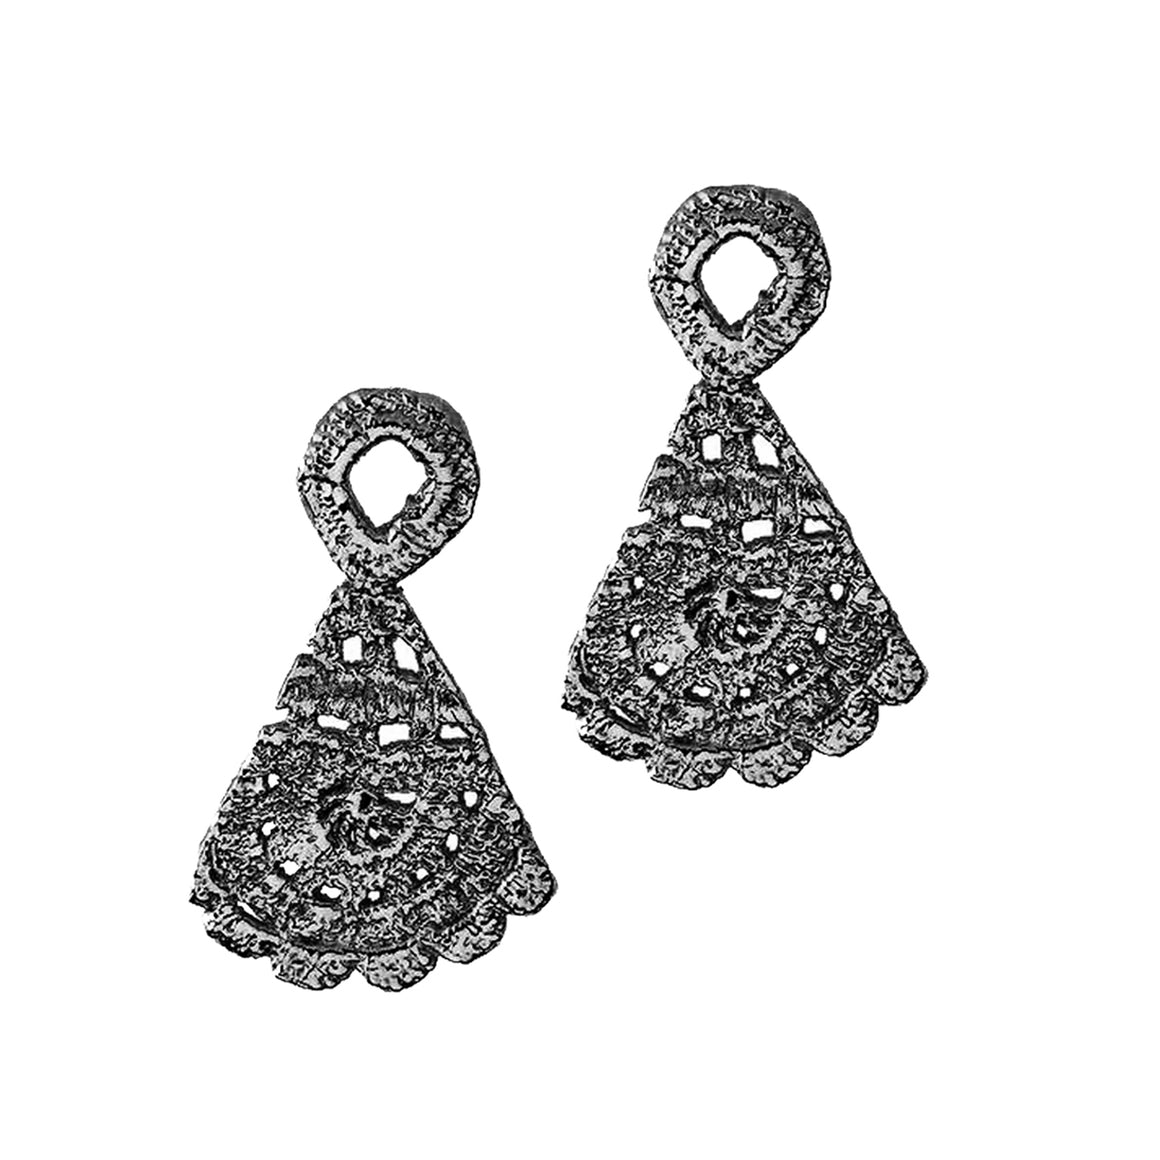 Morgana Earrings in Lace Crochet - Alexandra Koumba Designs